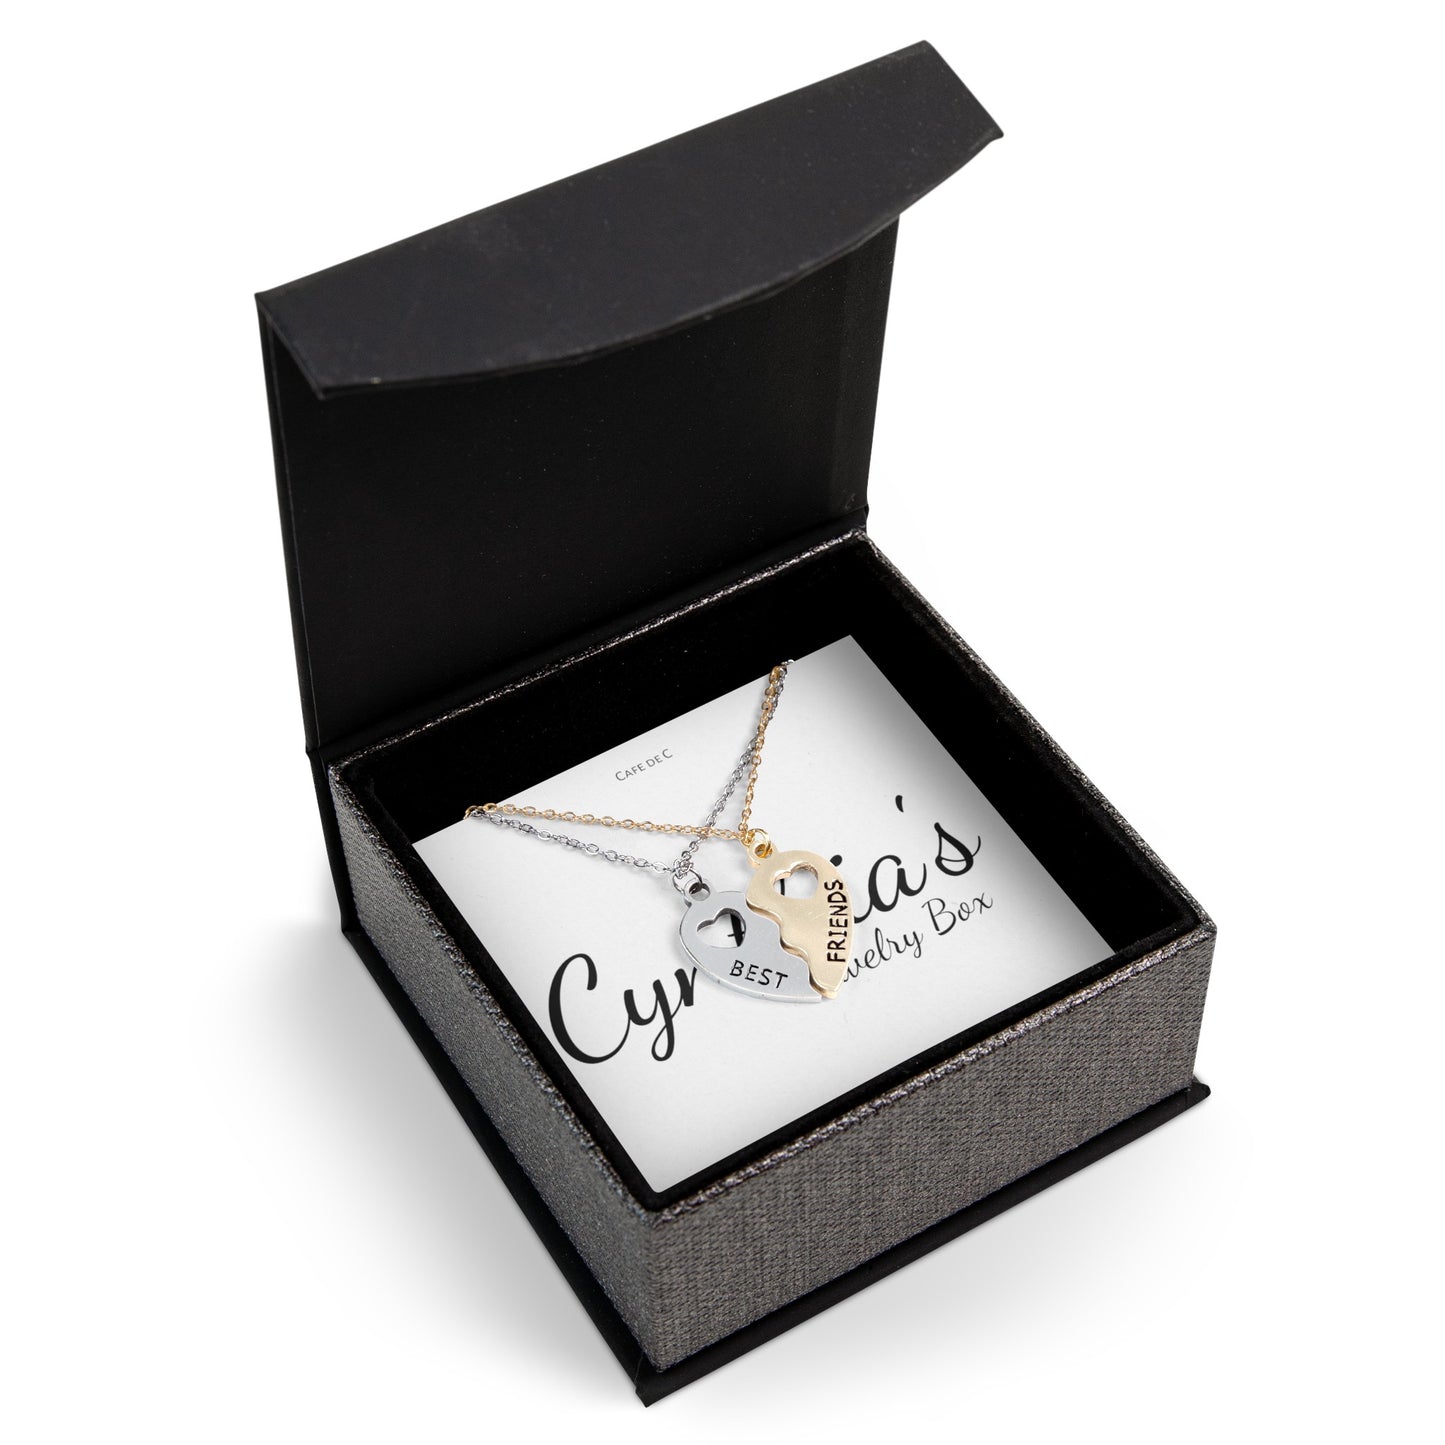 Cynthia's Jewelry Box (BFF Half Heart Necklace Set)